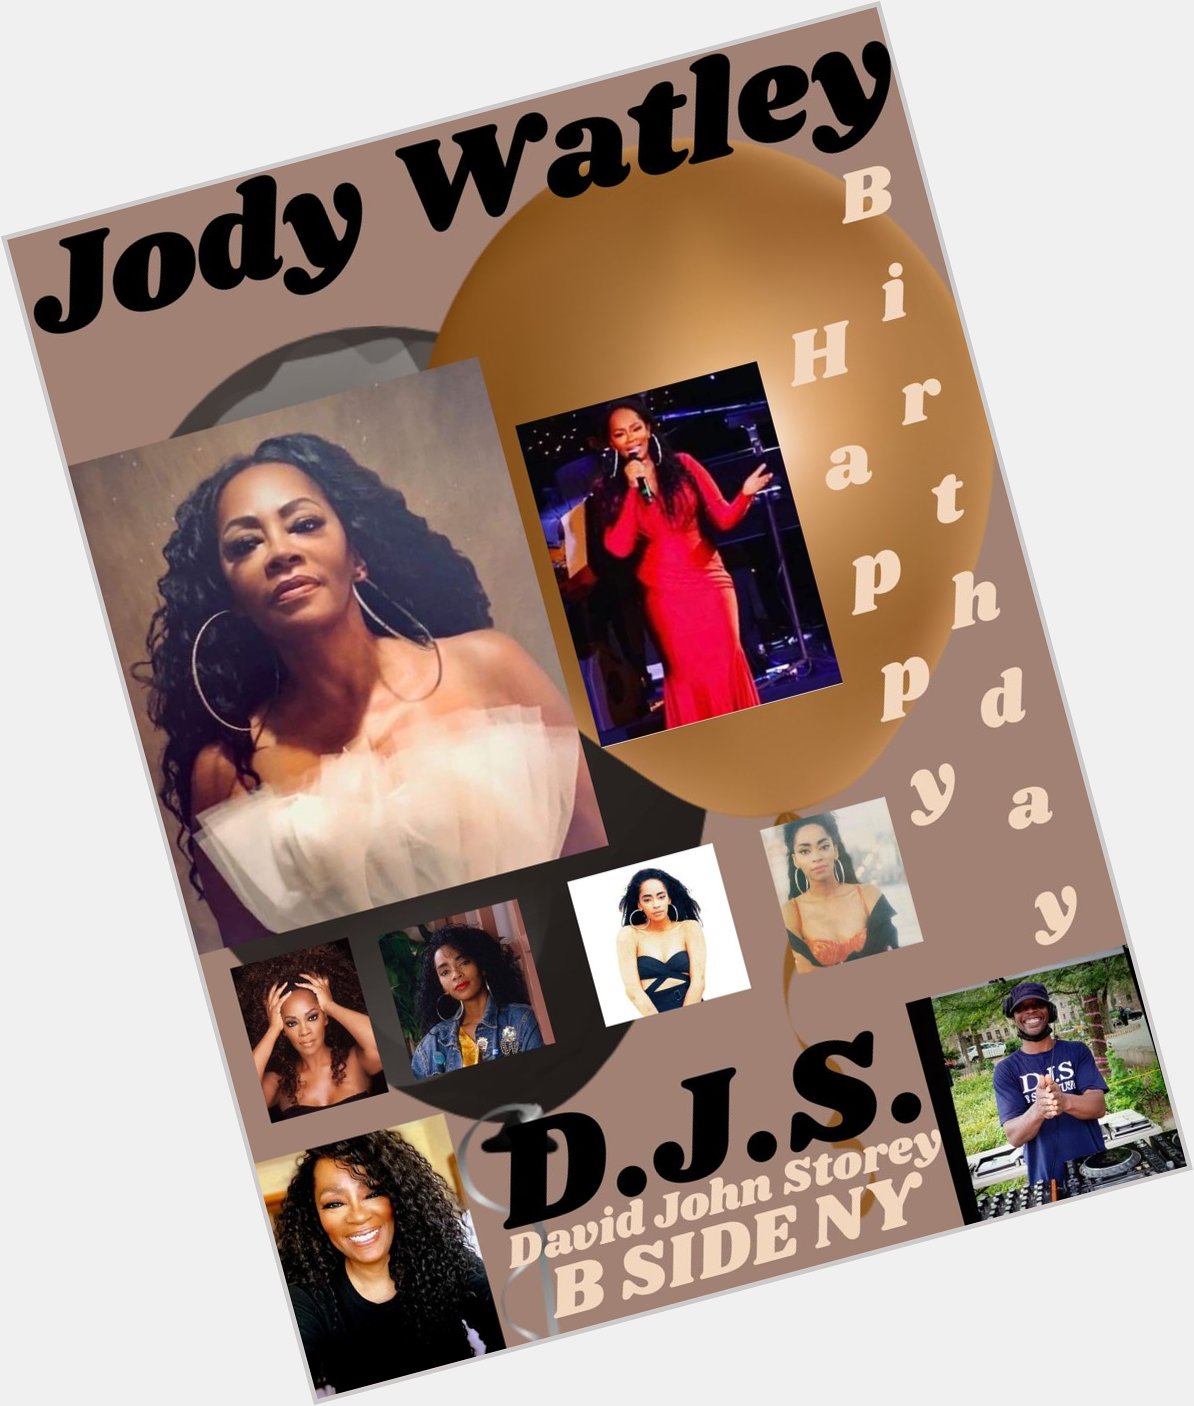 I(D.J.S.)\"B SIDE NY\" taking time to wish Singer: \"JODY WATLEY\" a Happy Birthday!!! 